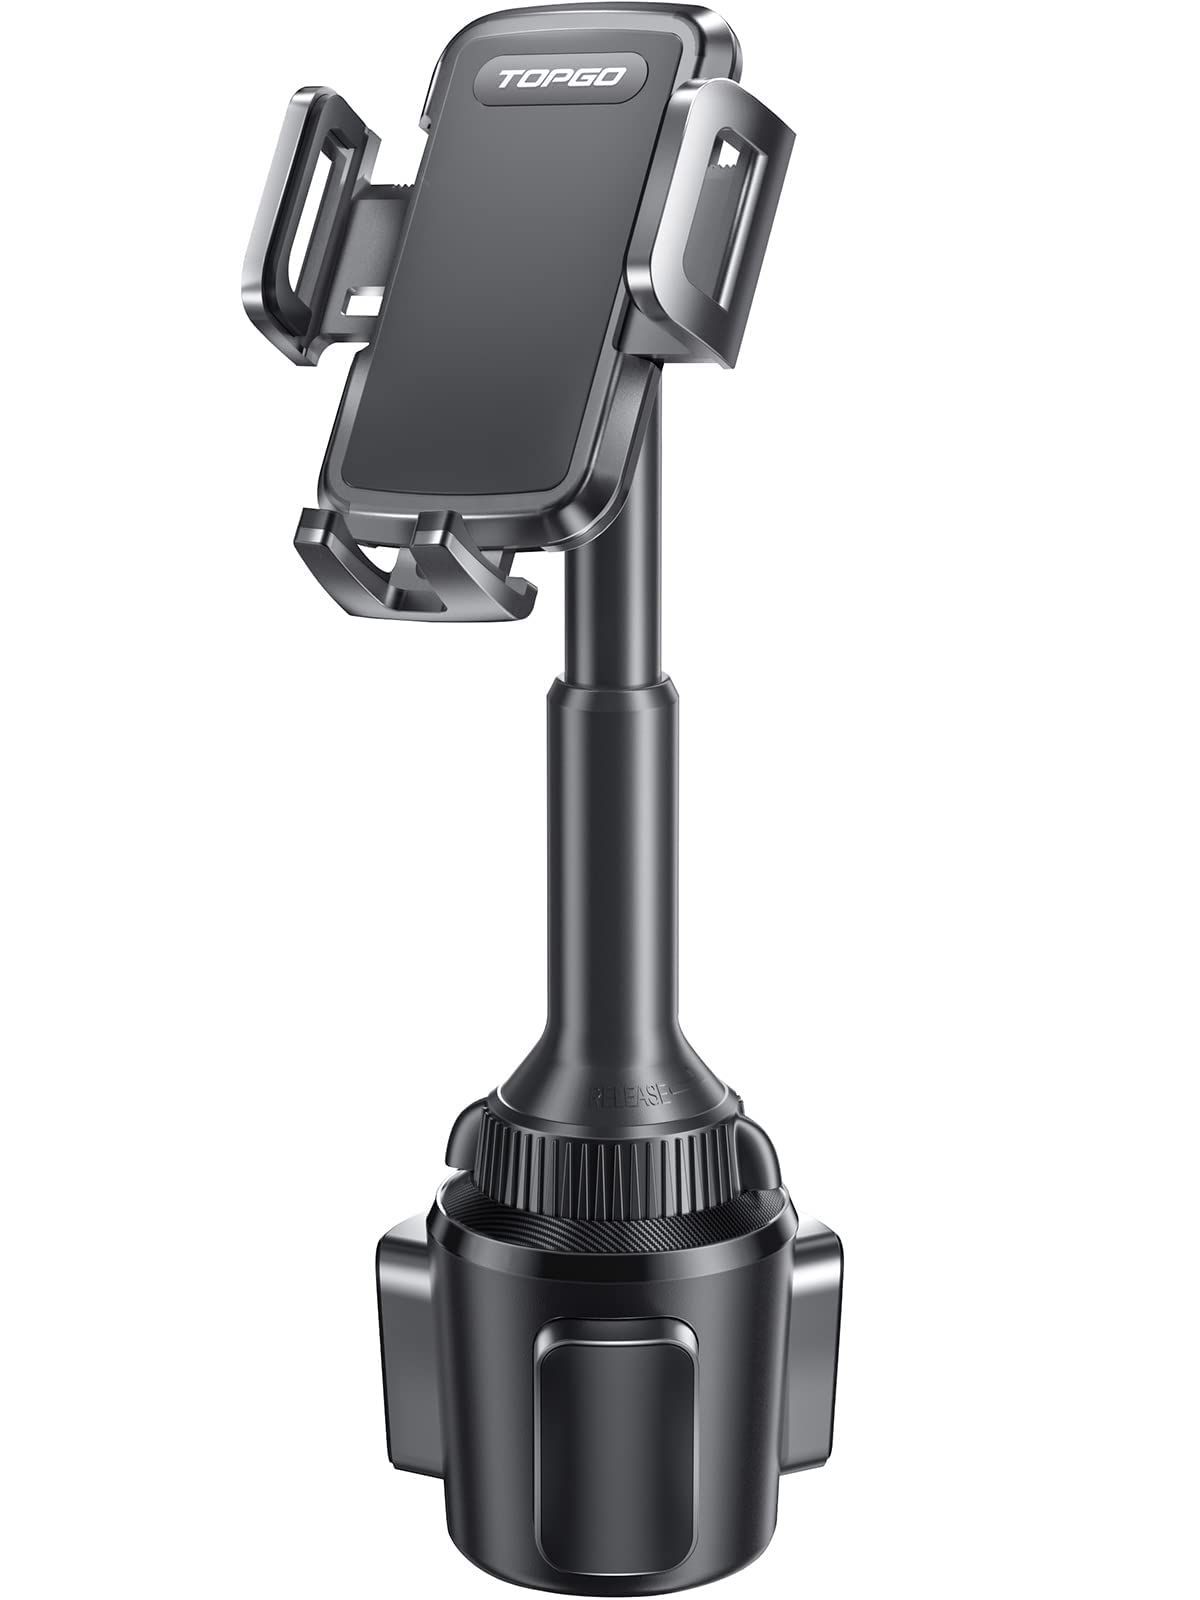 BESTRIX 車用携帯電話ホルダー マグネット式車載携帯電話マウント ダッシュボード用車載携帯電話ホルダー iPhone 11Pro、Xr、Xs、X（並行輸入品） - 1